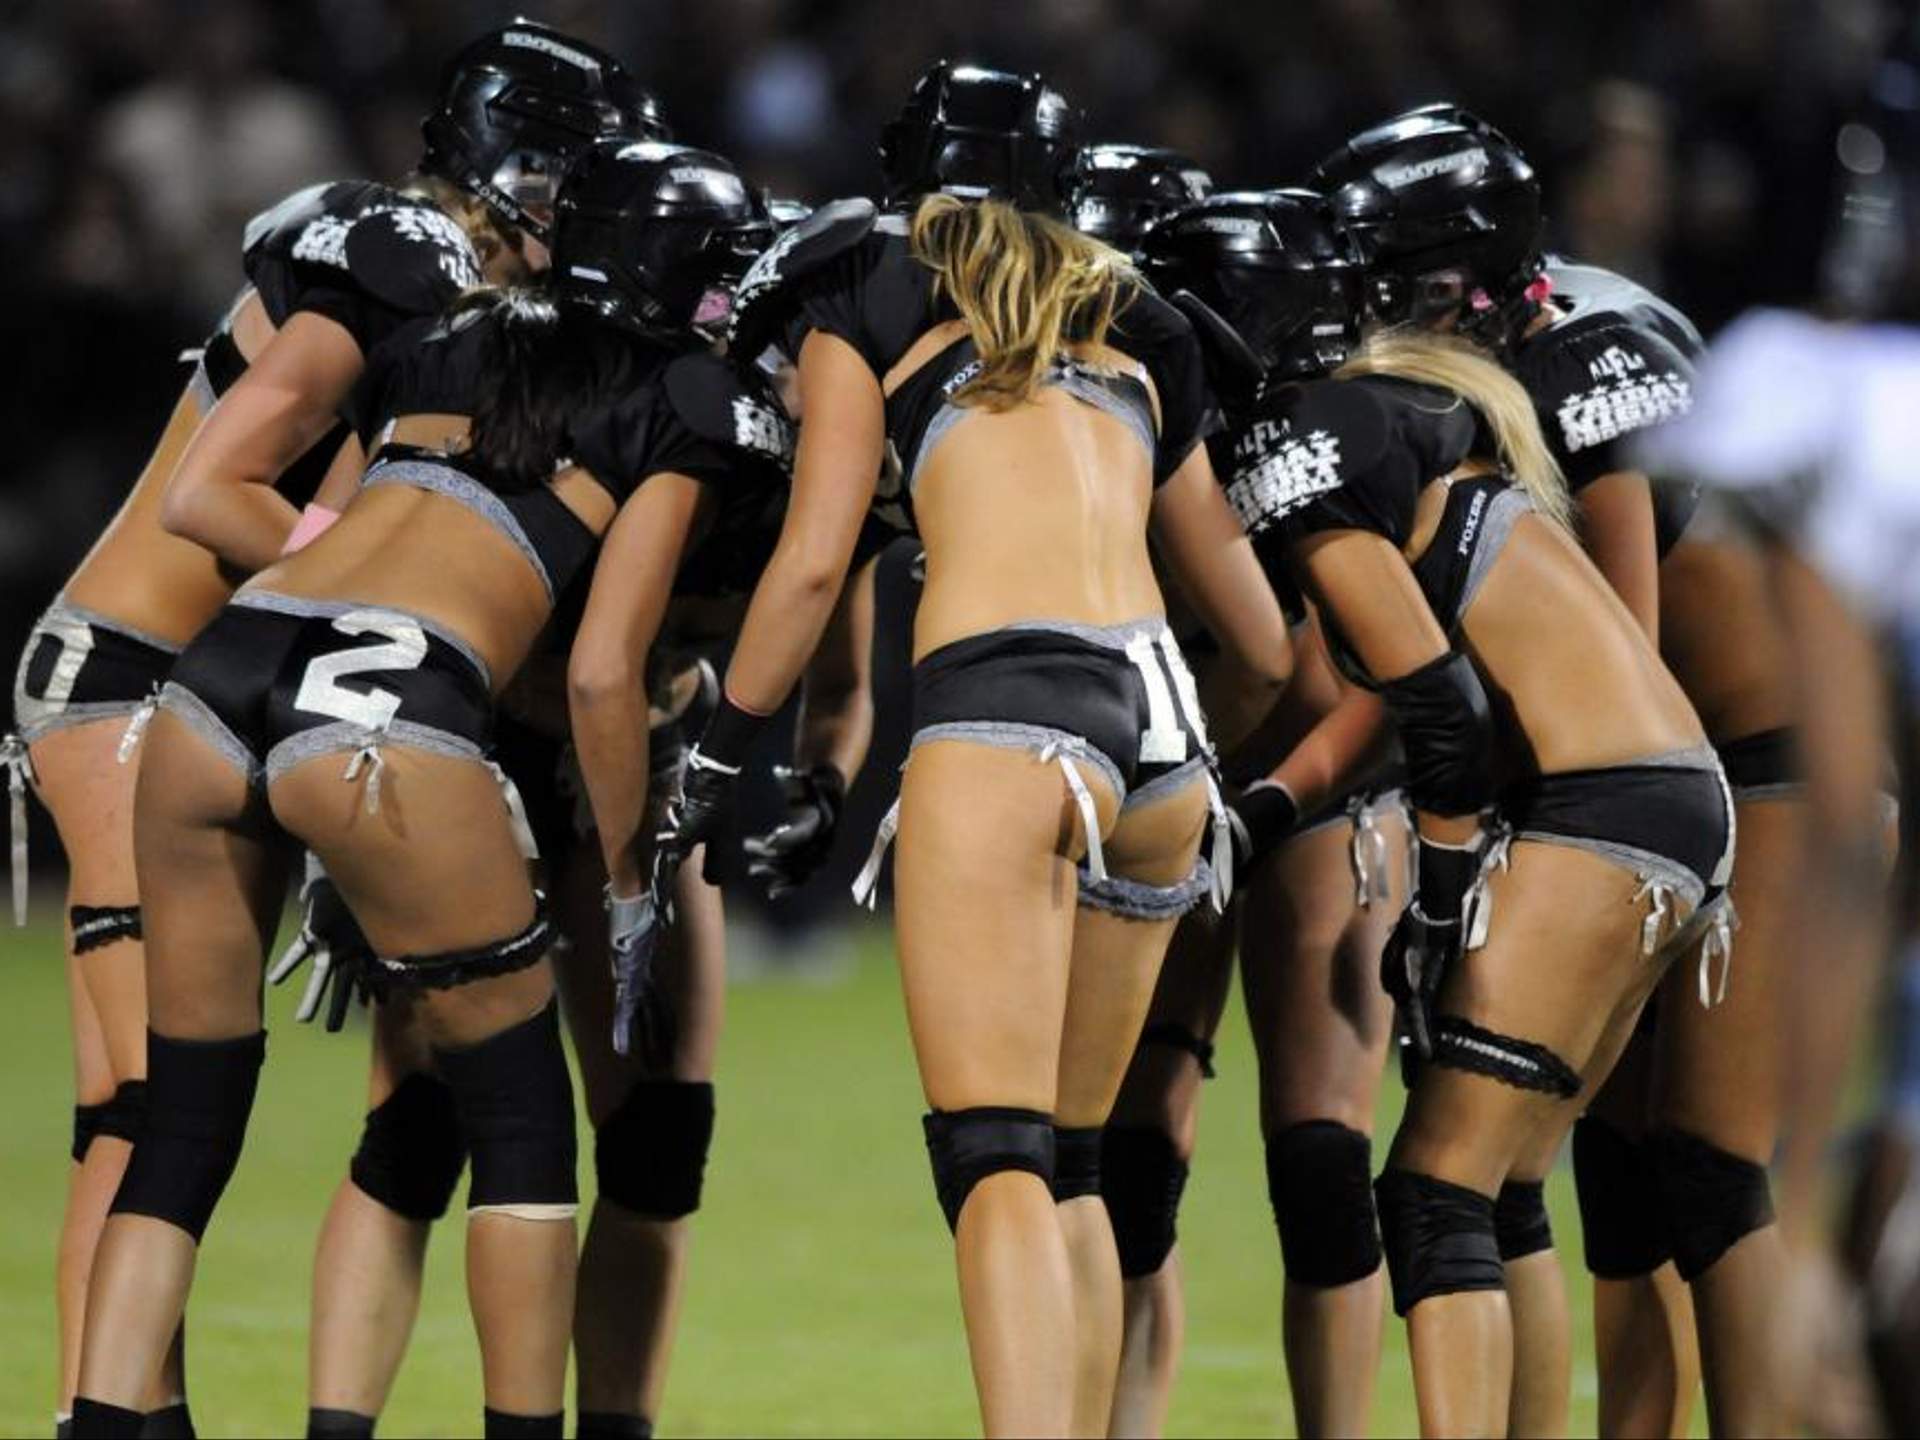 axel hartman share lingerie football league naked photos